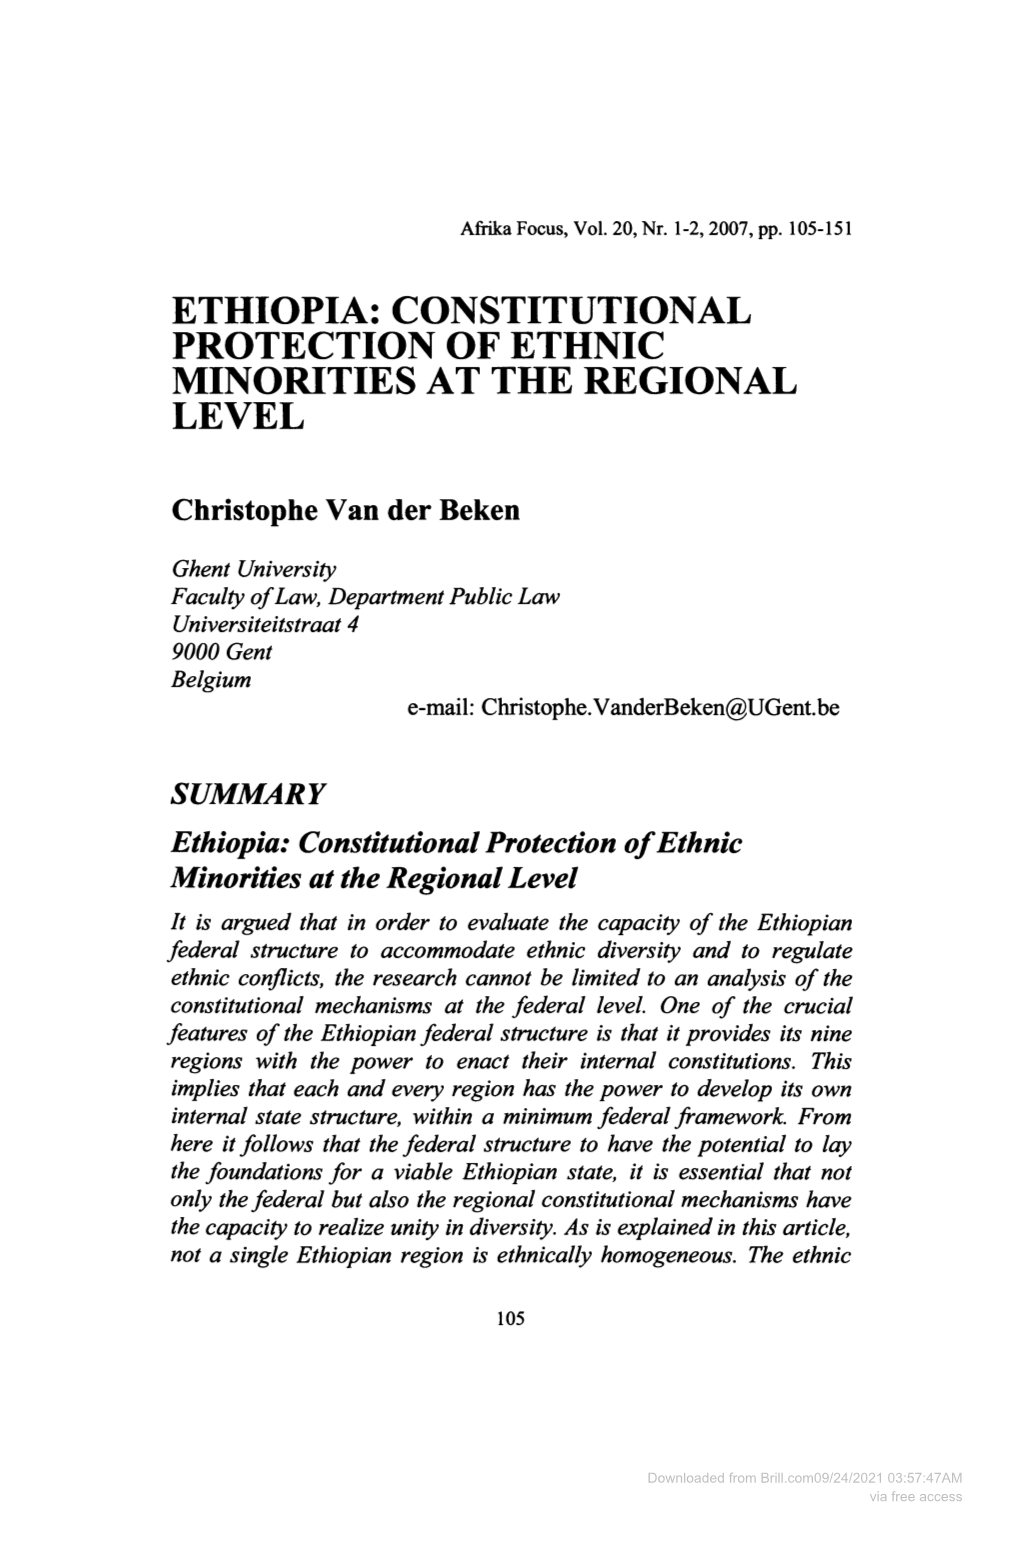 Ethiopia: Constitutional Protection of Ethnic Minorities at the Regional Level